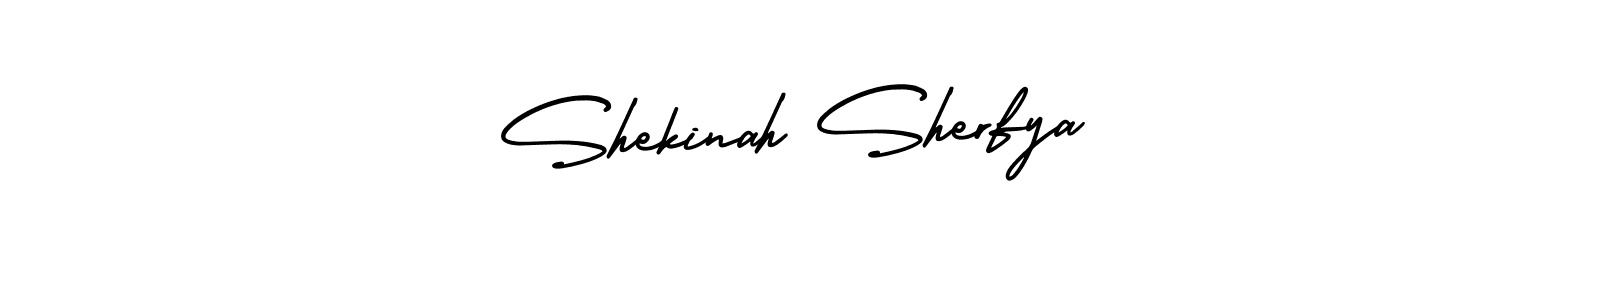 How to Draw Shekinah Sherfya signature style? AmerikaSignatureDemo-Regular is a latest design signature styles for name Shekinah Sherfya. Shekinah Sherfya signature style 3 images and pictures png